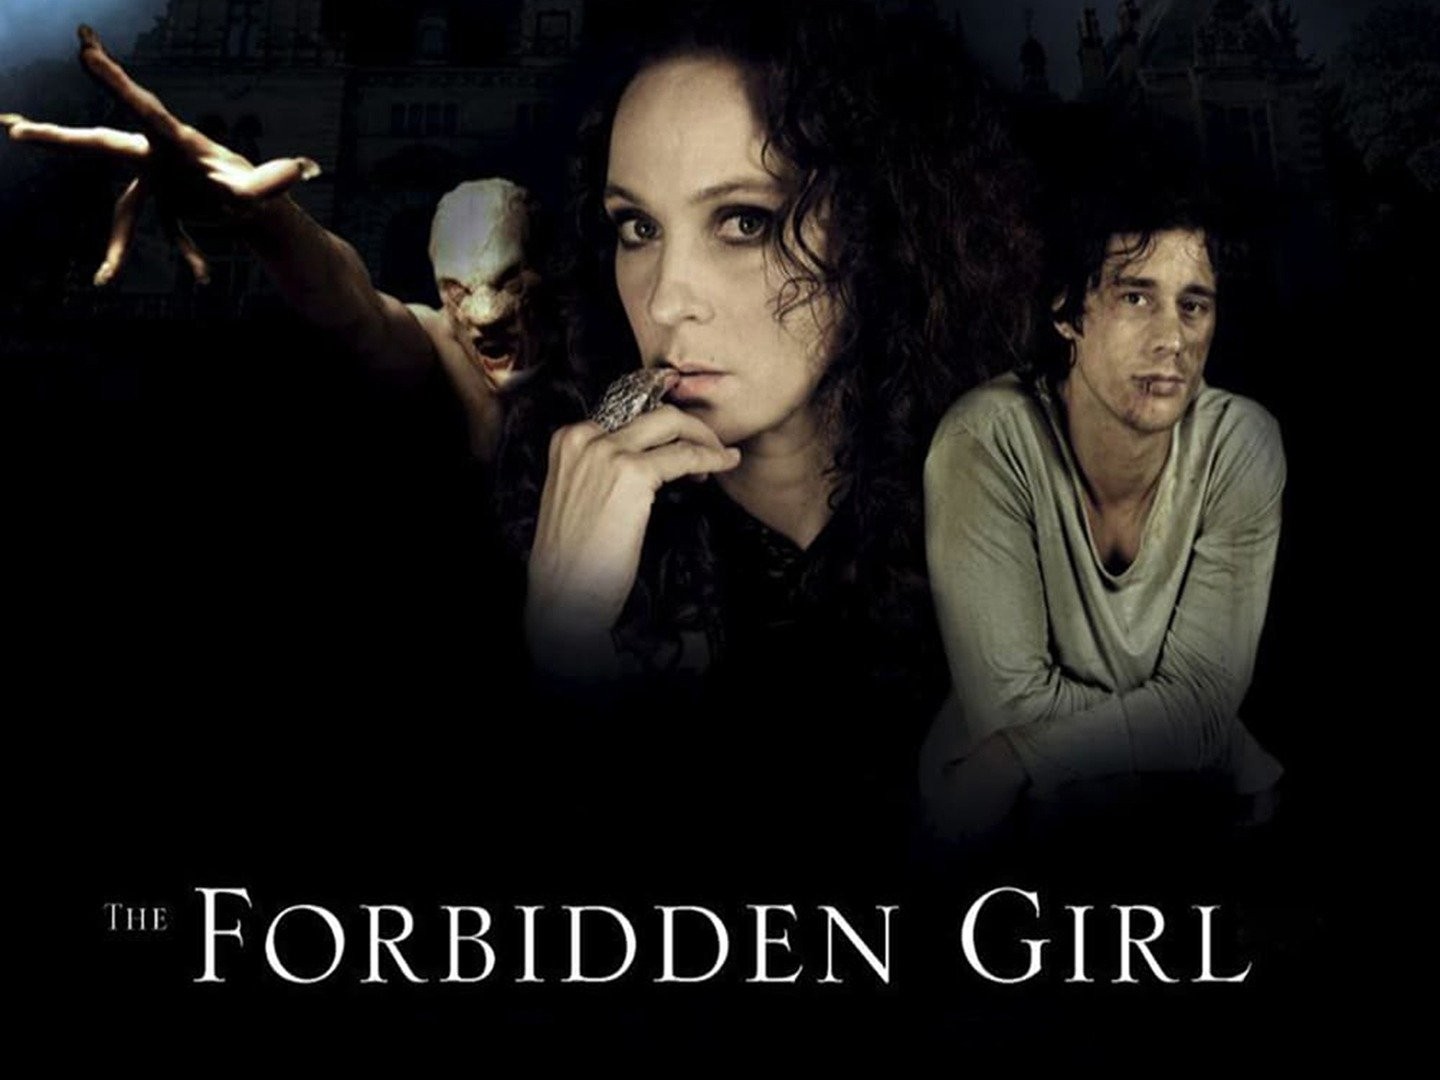 The Forbidden Girl - Wikipedia